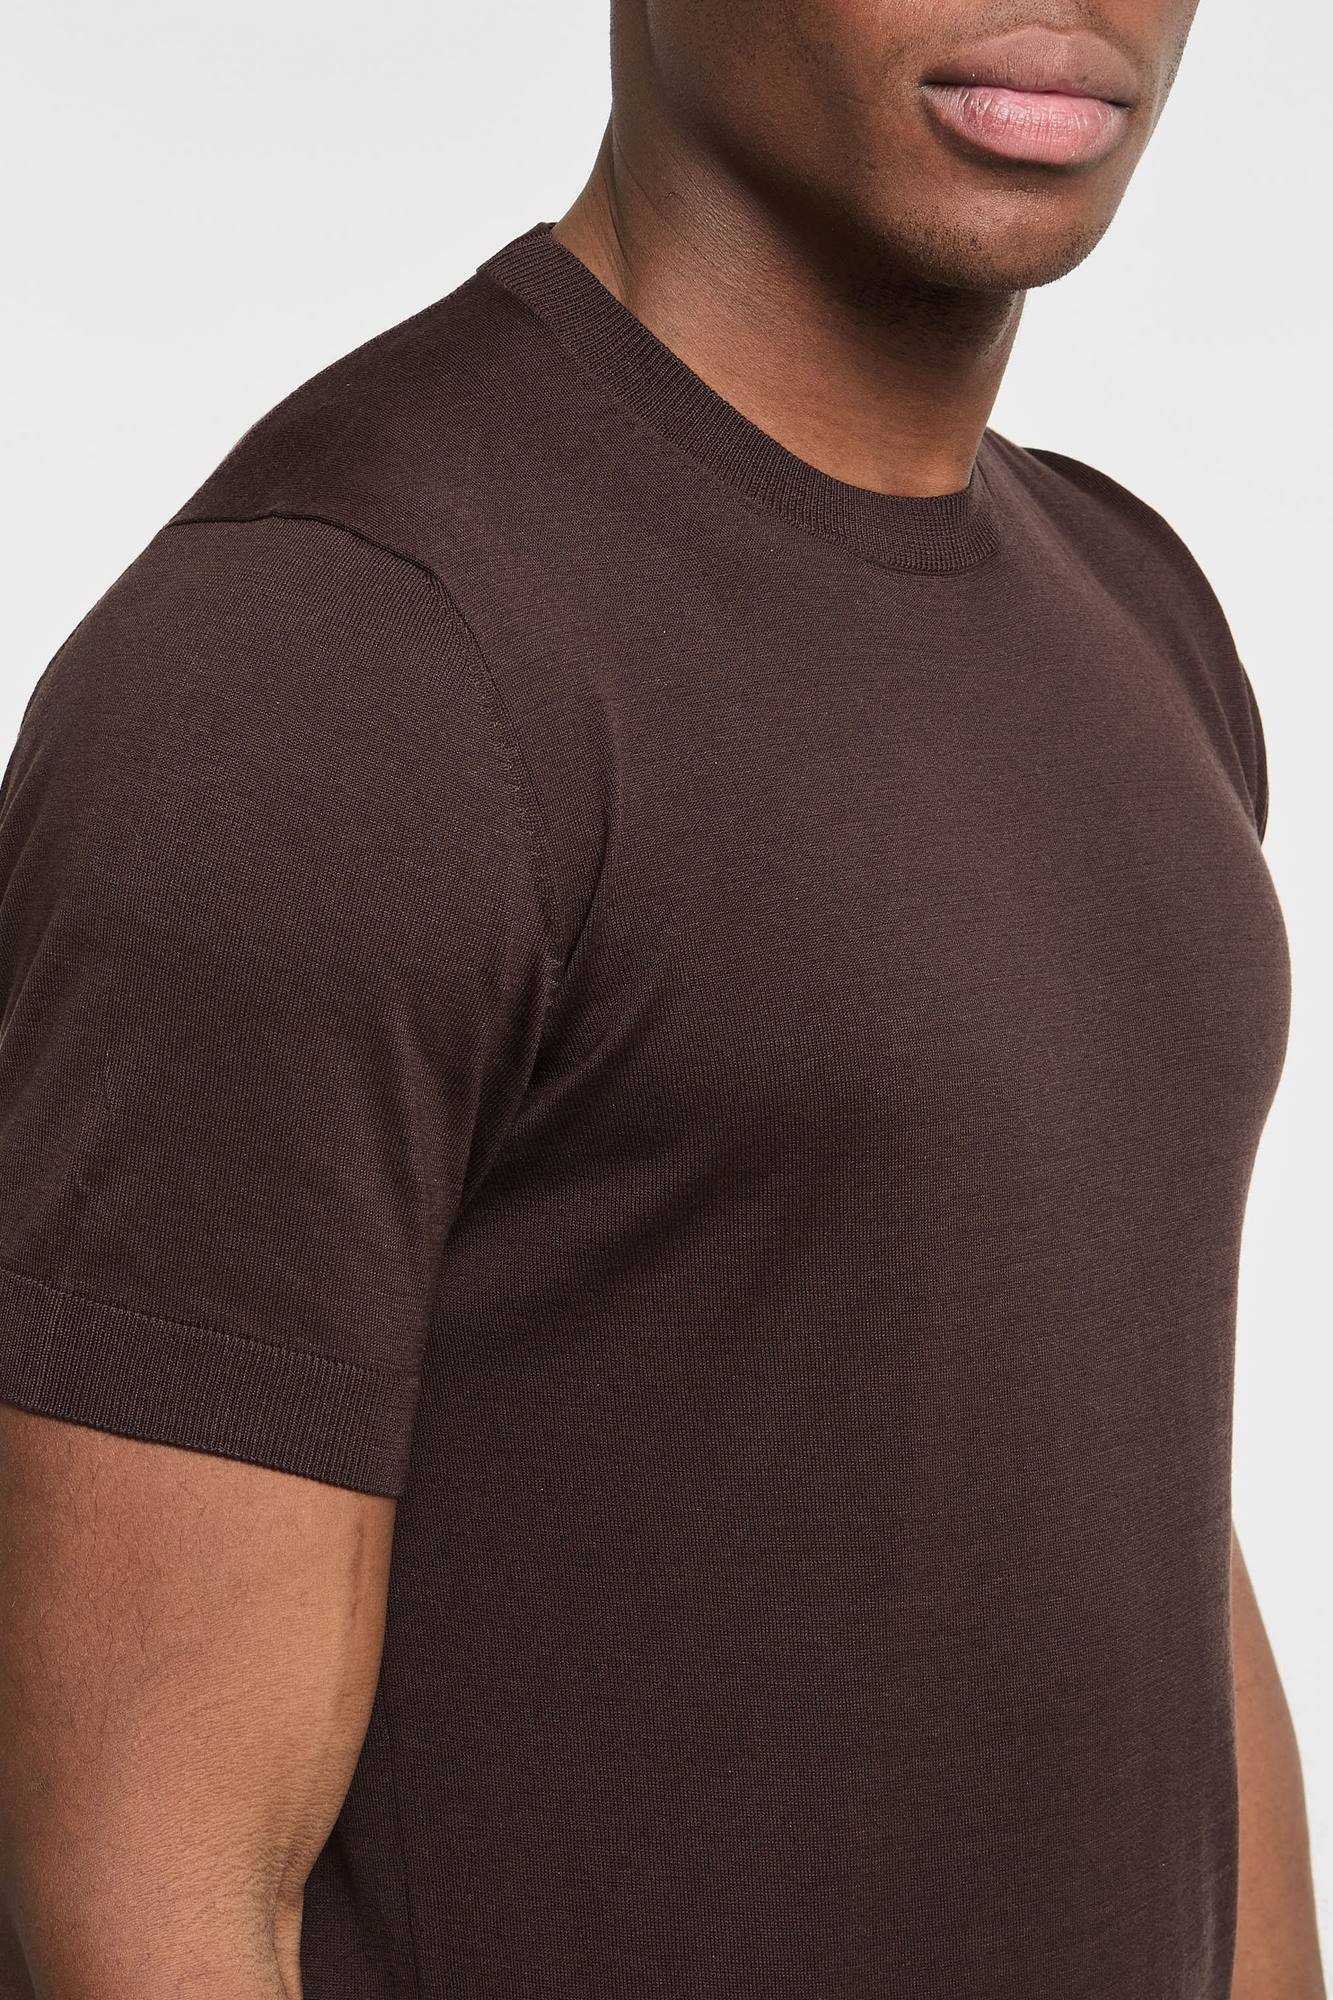 Paolo Pecora Silk/Cotton Blend Brown T-Shirt-5